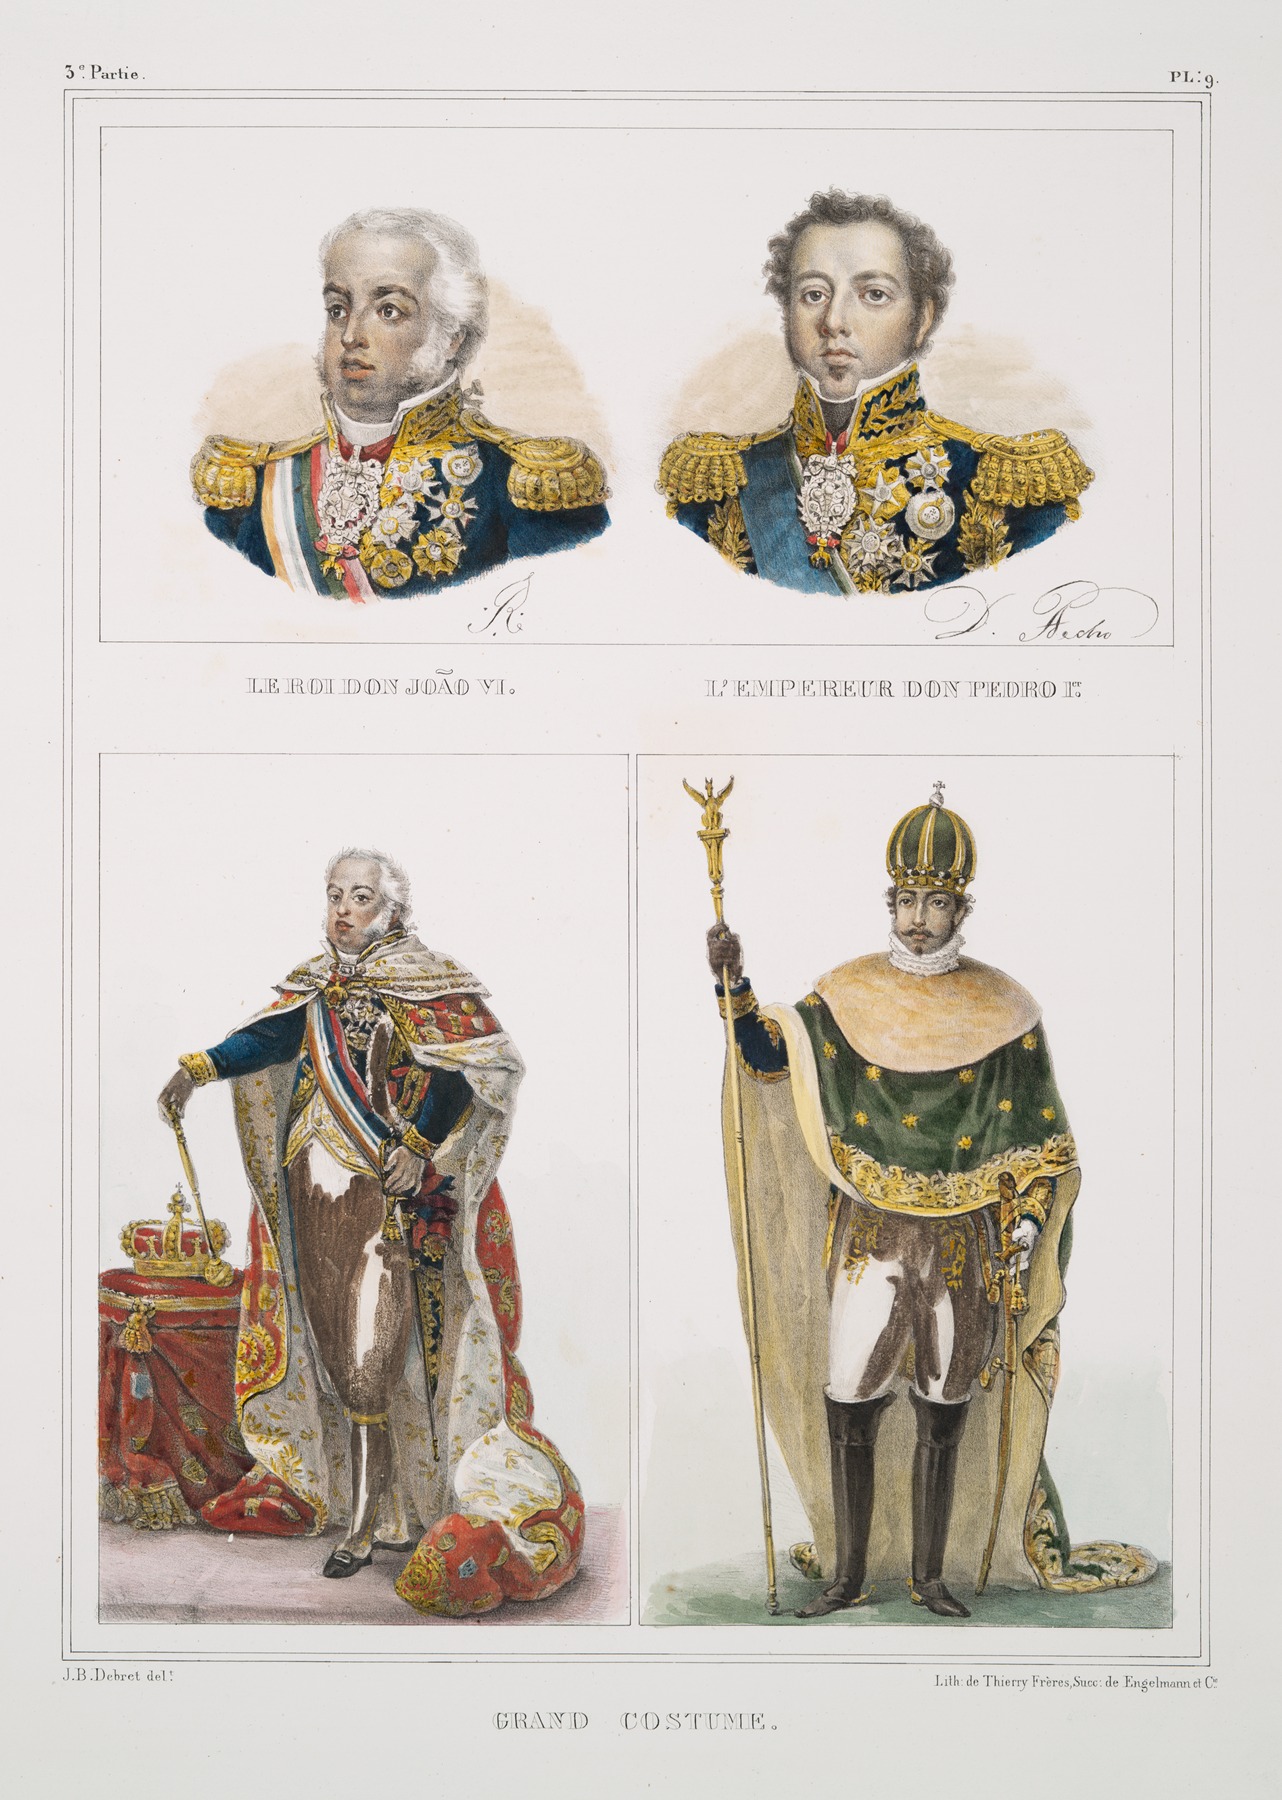 Jean Baptiste Debret - Le roi Don João VI; L’Empereur Don Pedro I-er; Grand costume